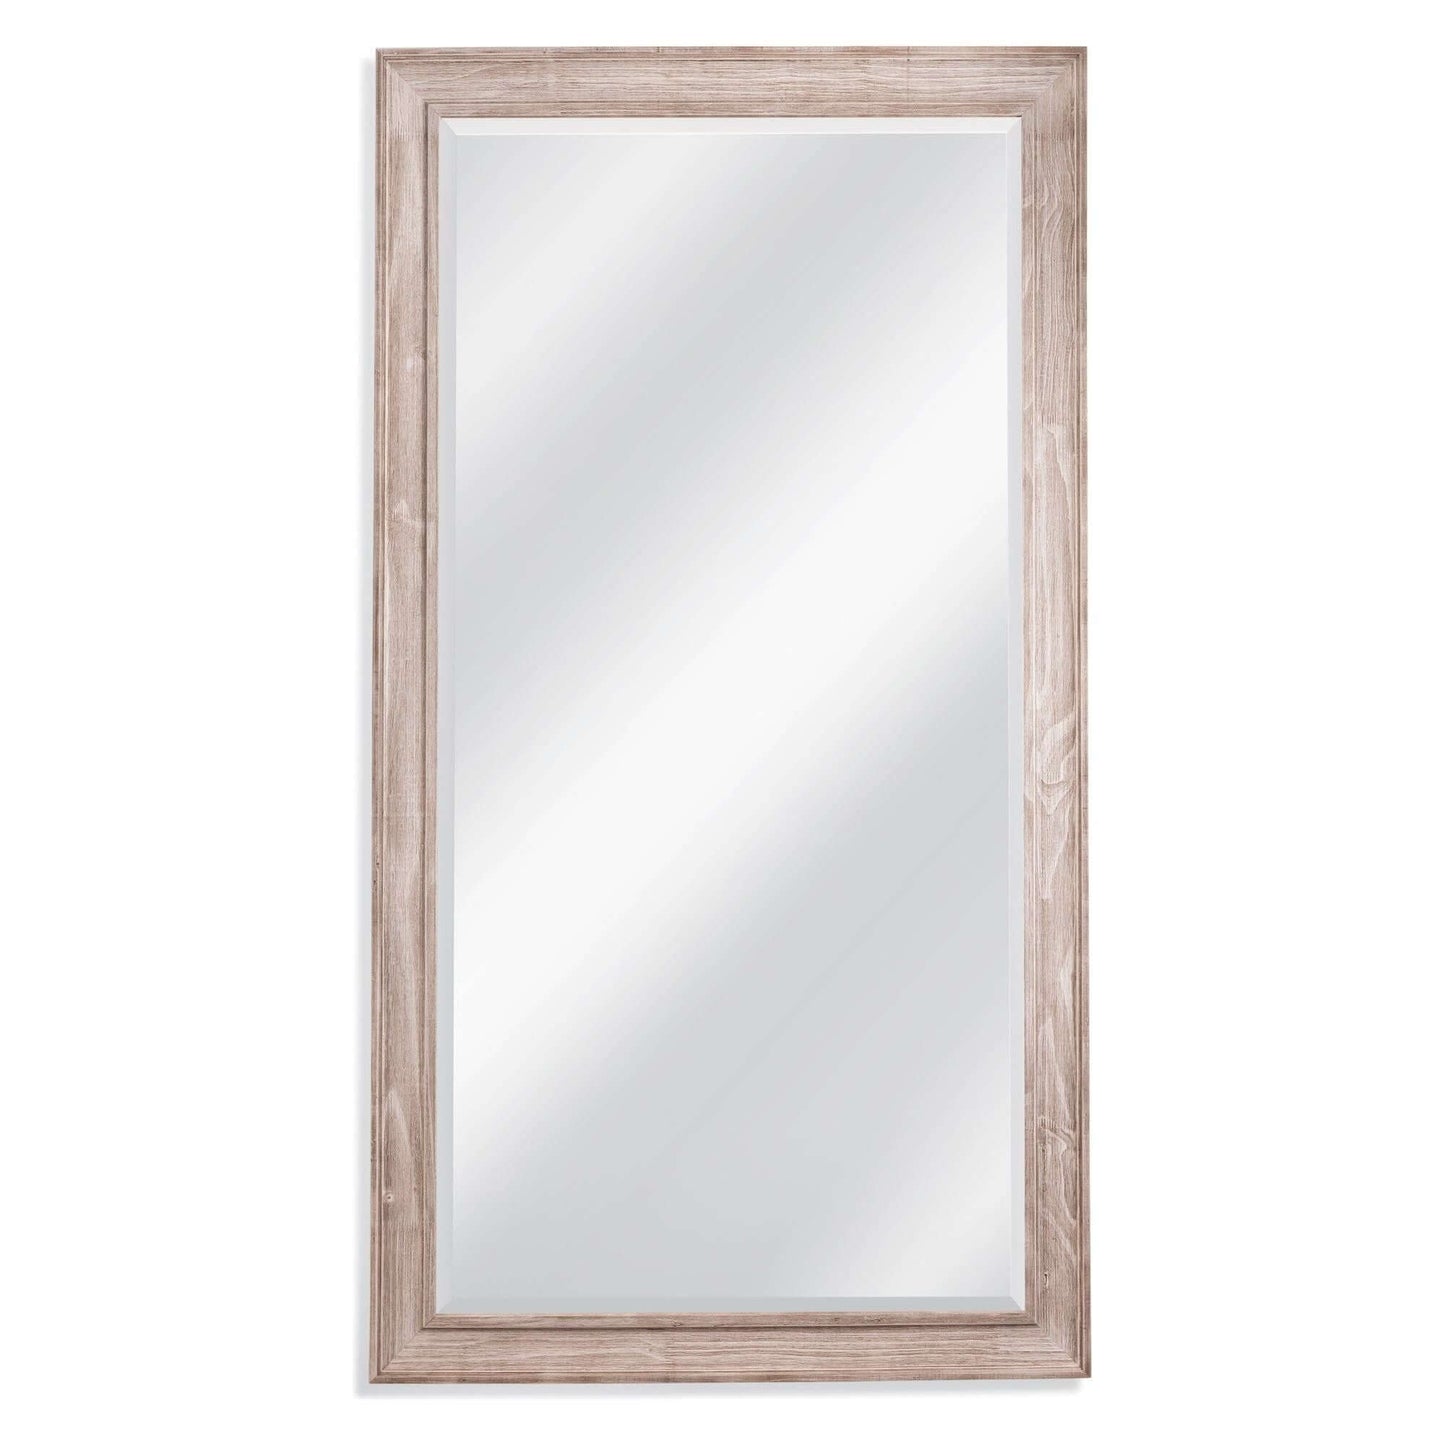 Bassett Mirror Kibbe Distressed Floor Mirror full-length view